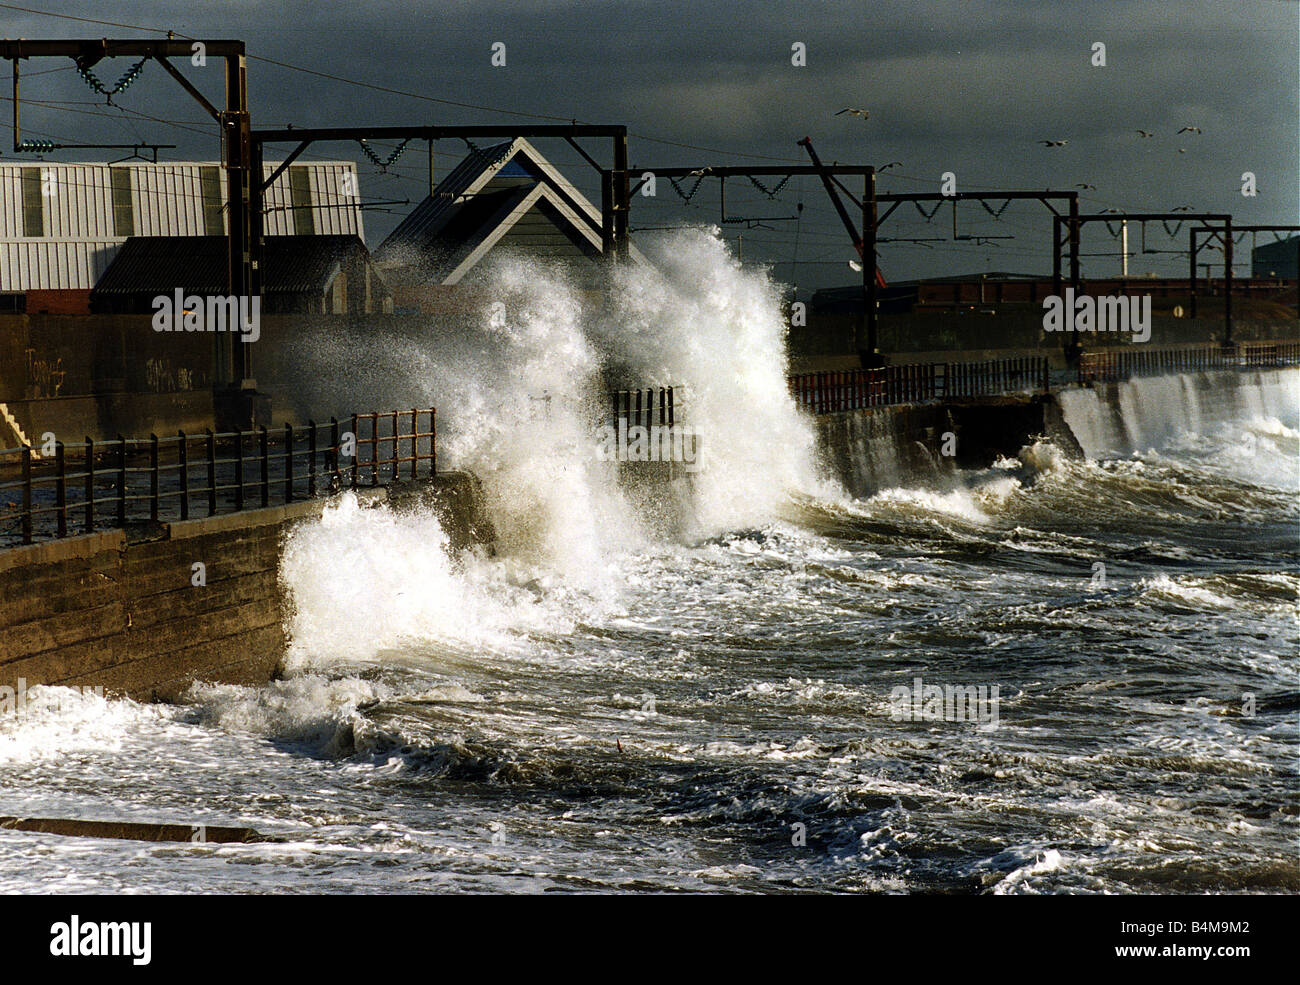 Wellen an der Wand am Solcots nach starkem Wind am Meer, grobe Juni 1996 zu werden verursacht Stockfoto